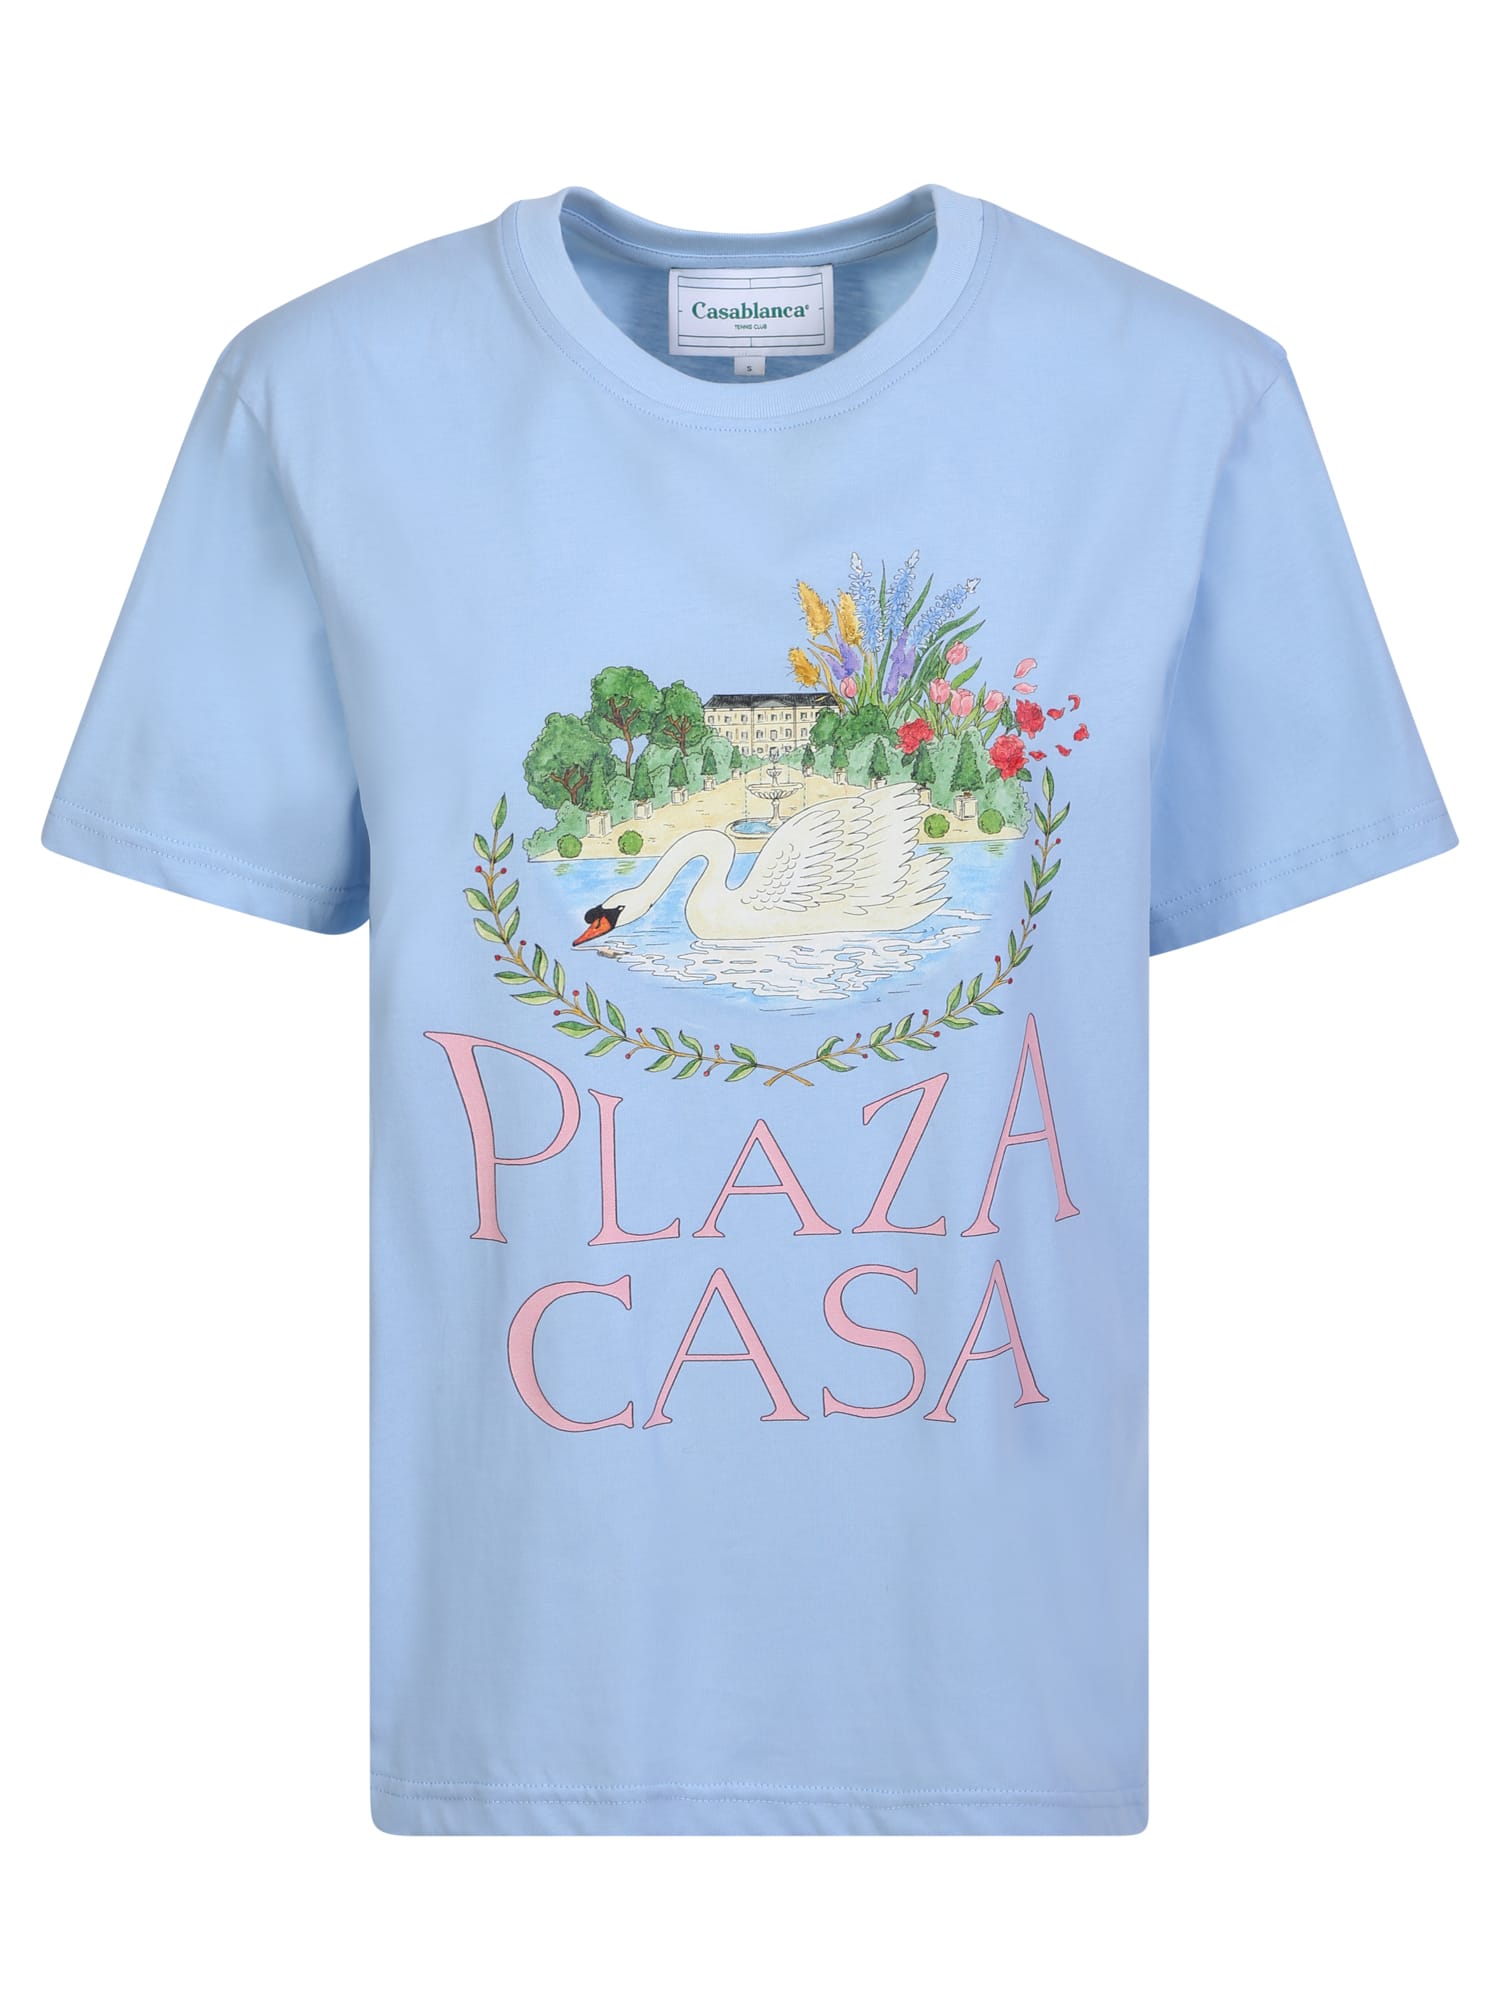 Casablanca Plaza Casa T-shirt